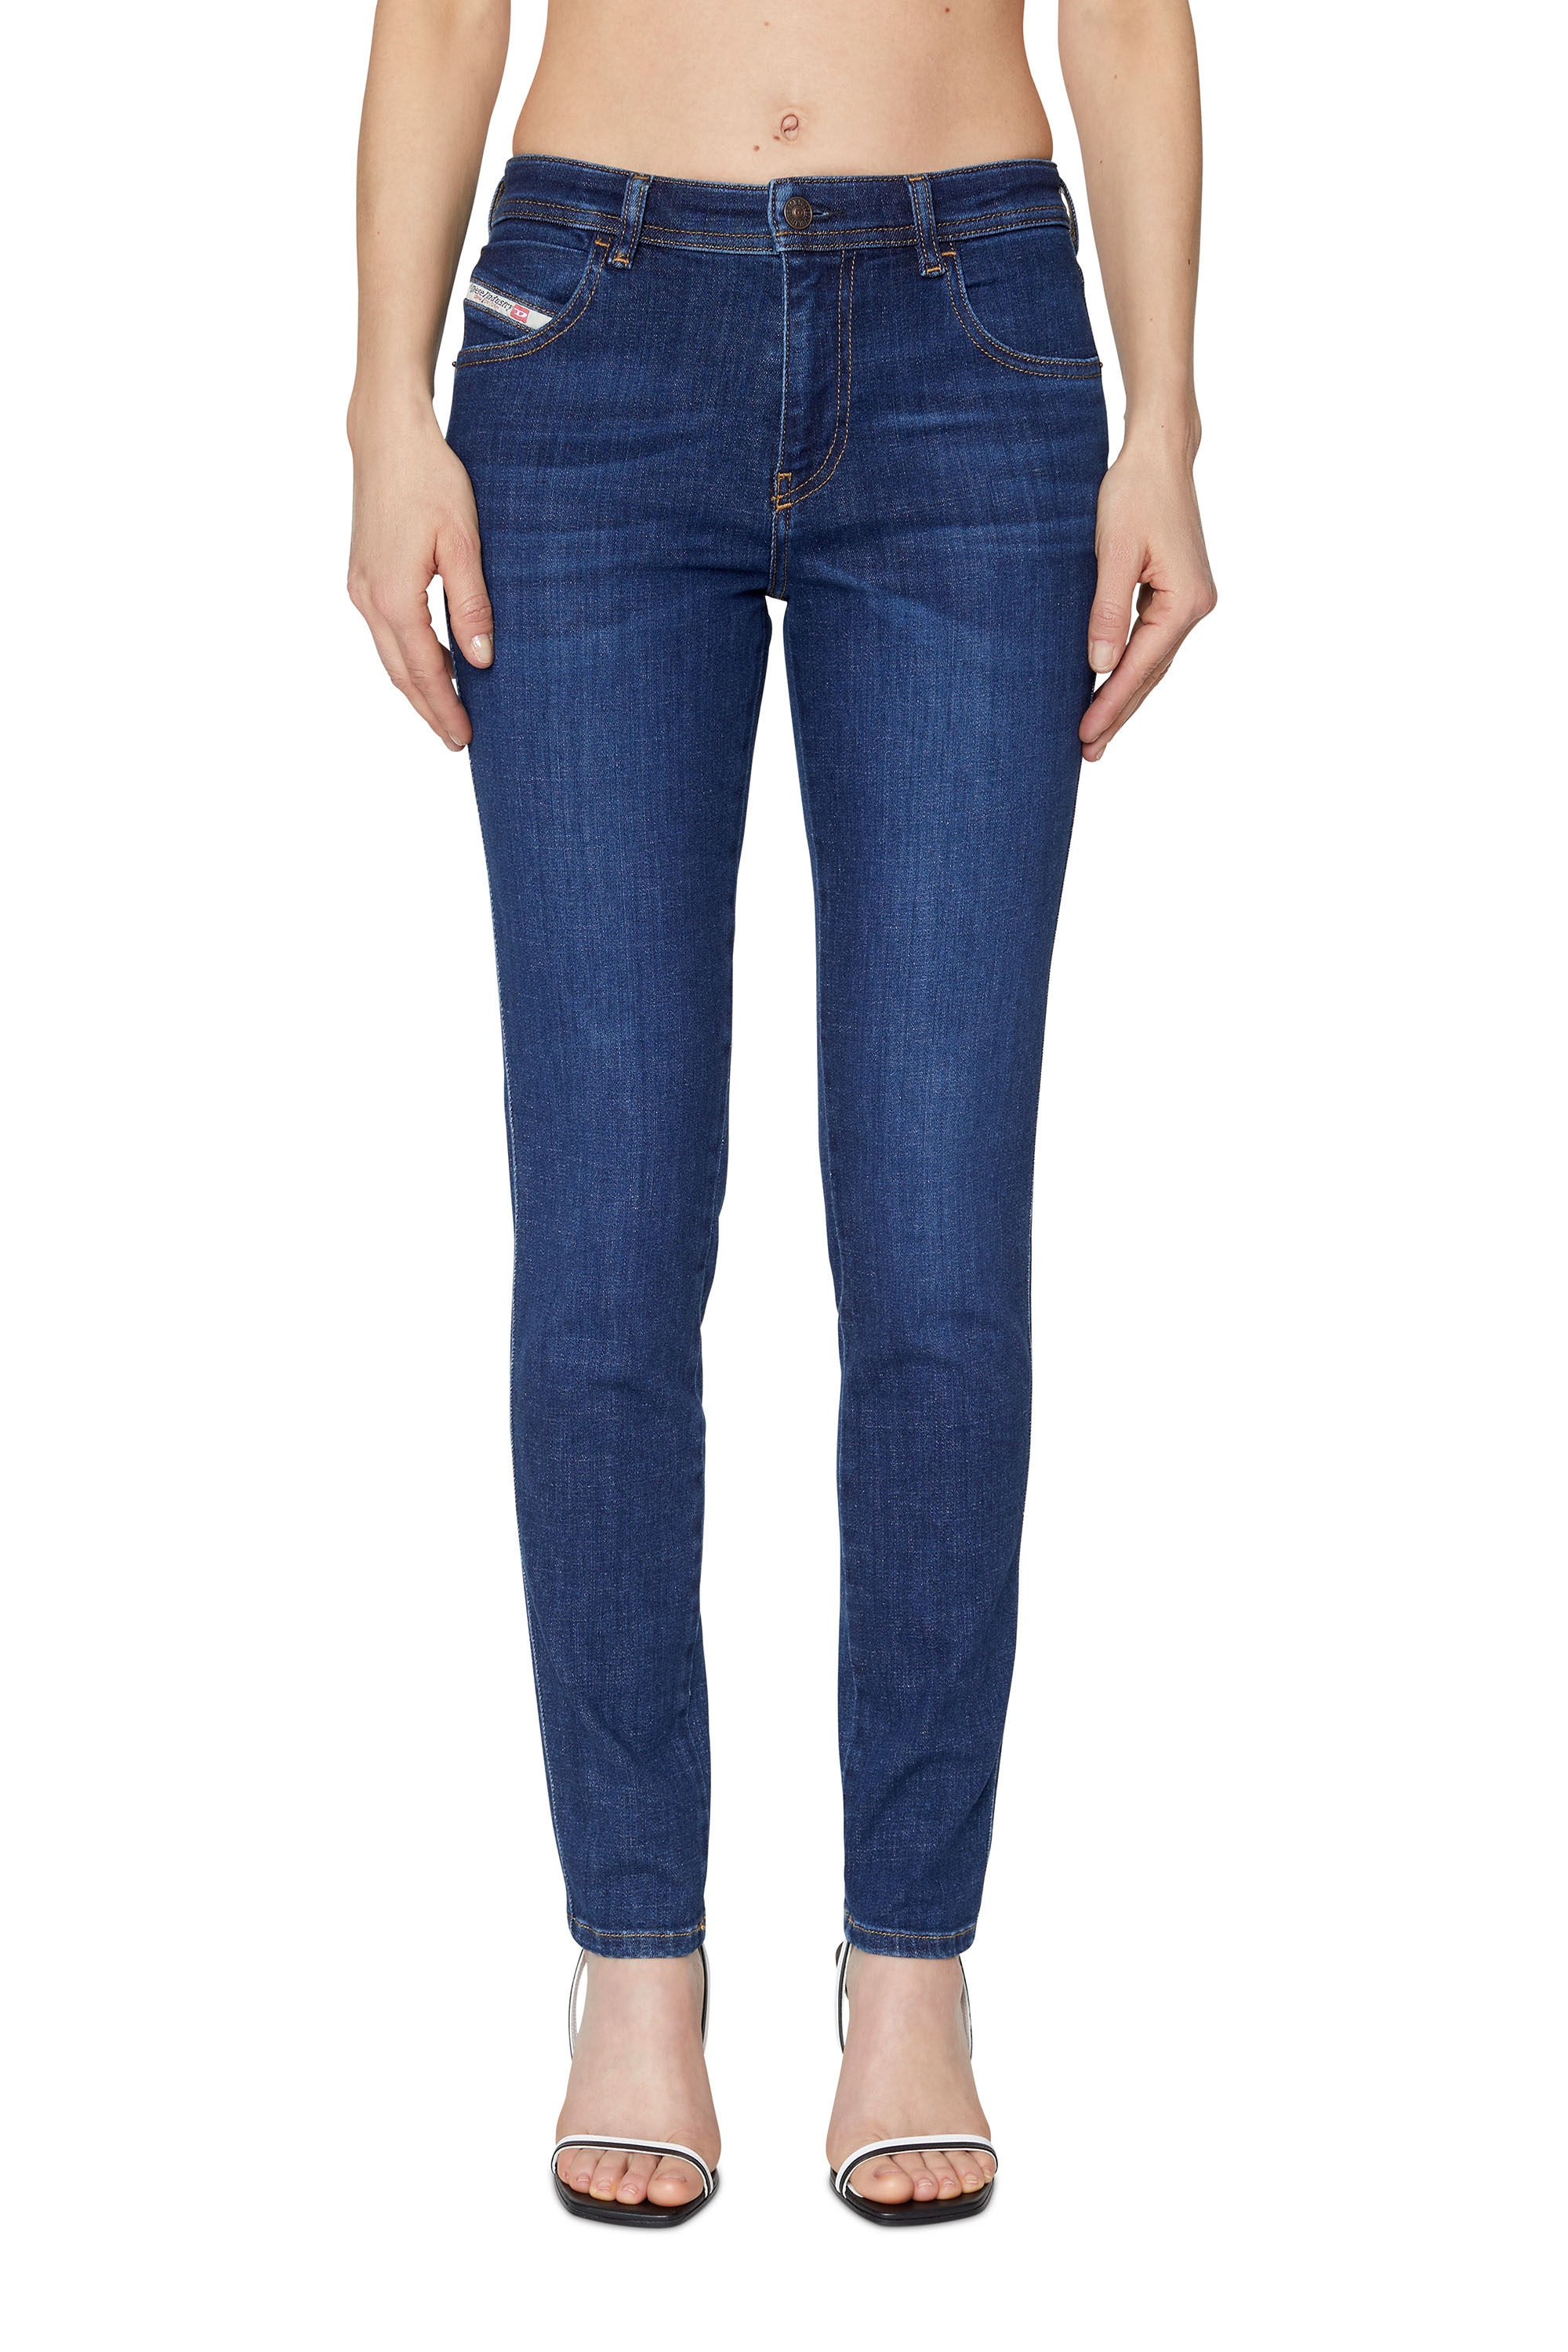 2015 BABHILA 09C58 Skinny Jeans, Bleu Foncé - Jeans